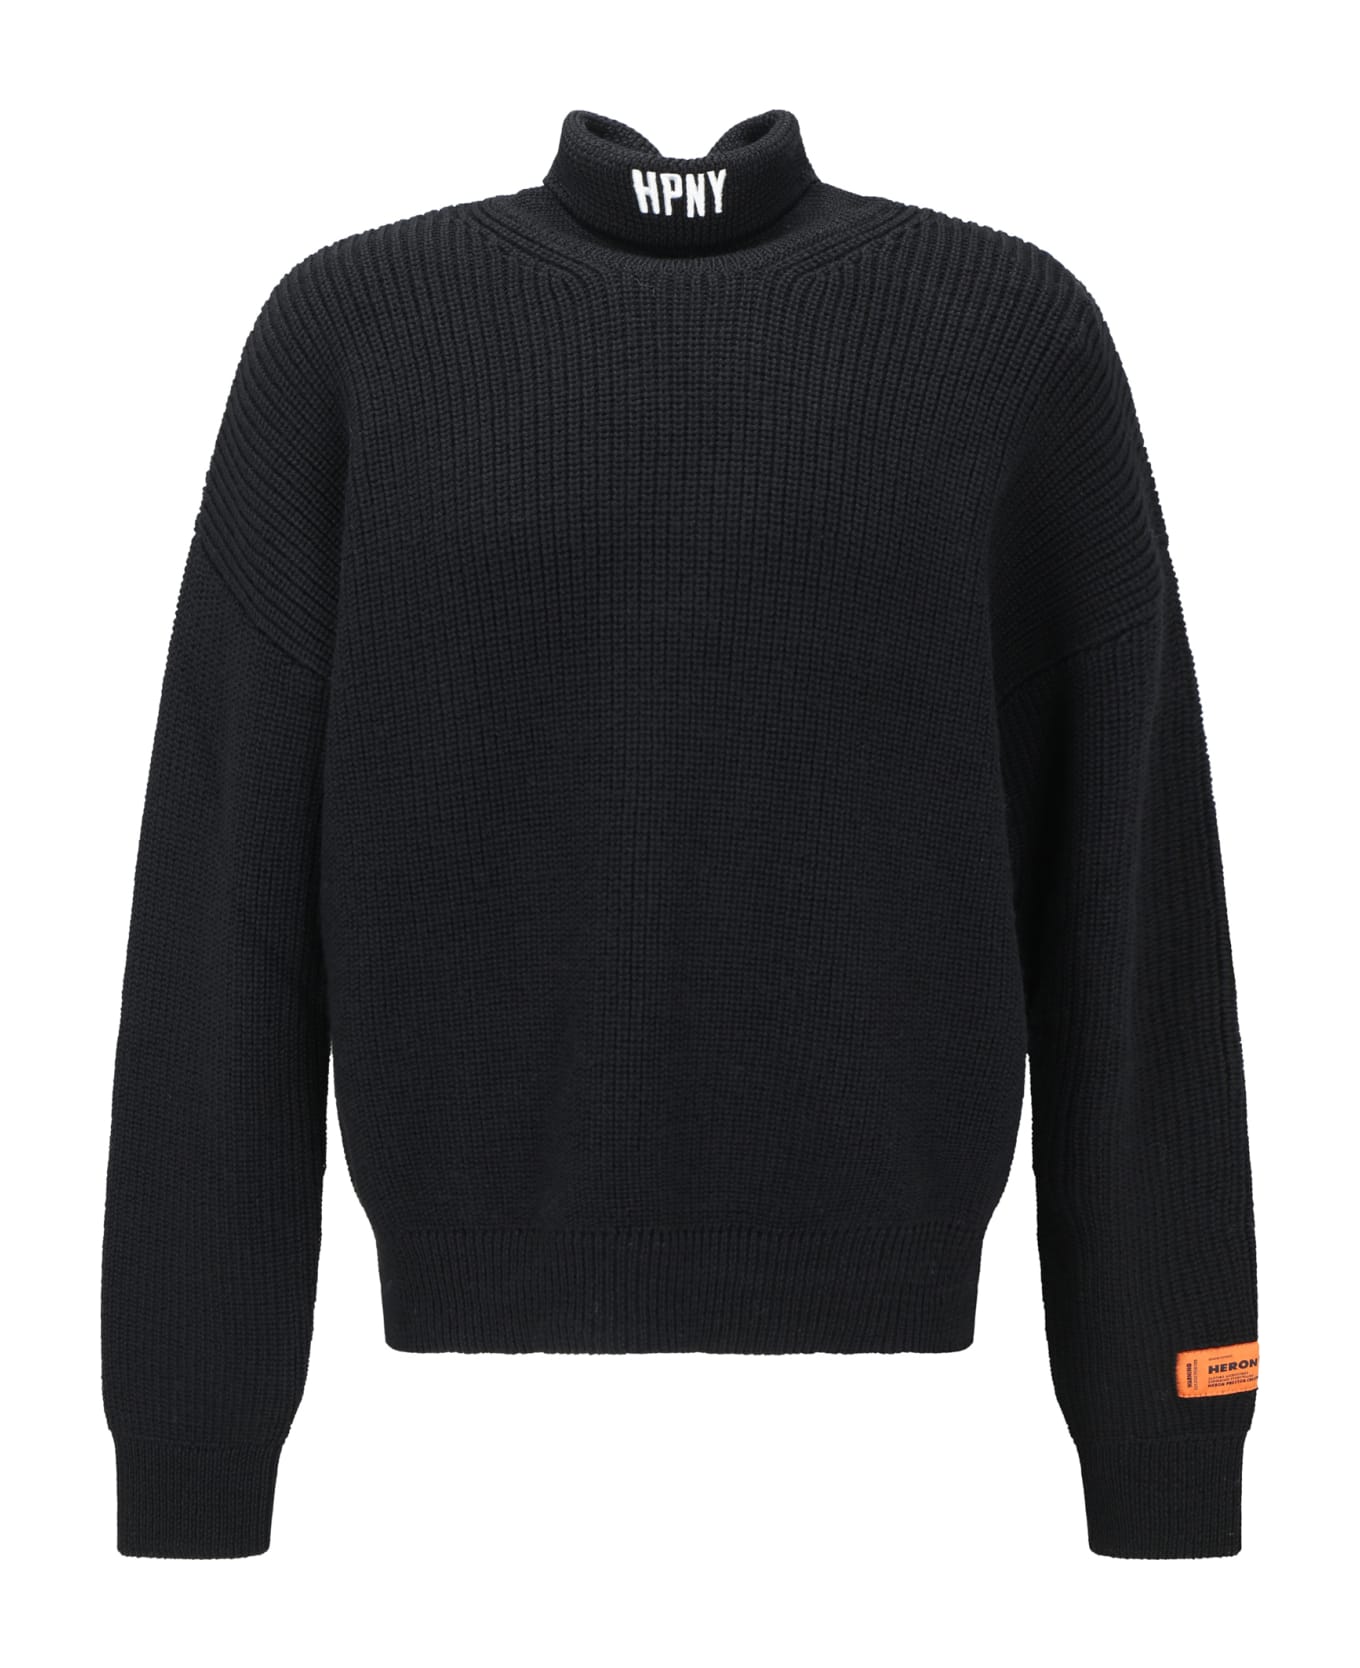 HERON PRESTON Wool Turtleneck Sweater - black